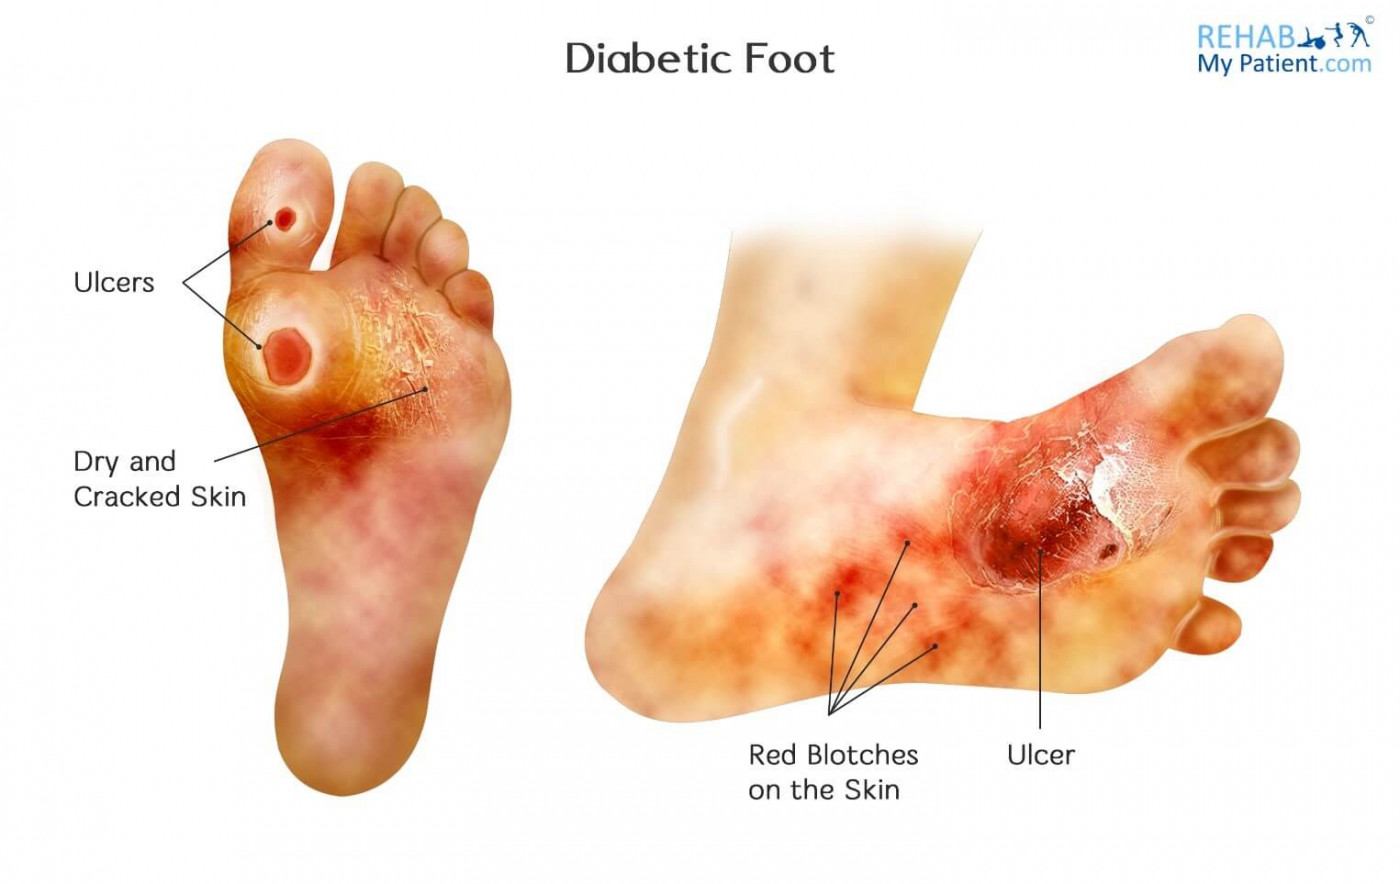 Diabetic Charcot Foot